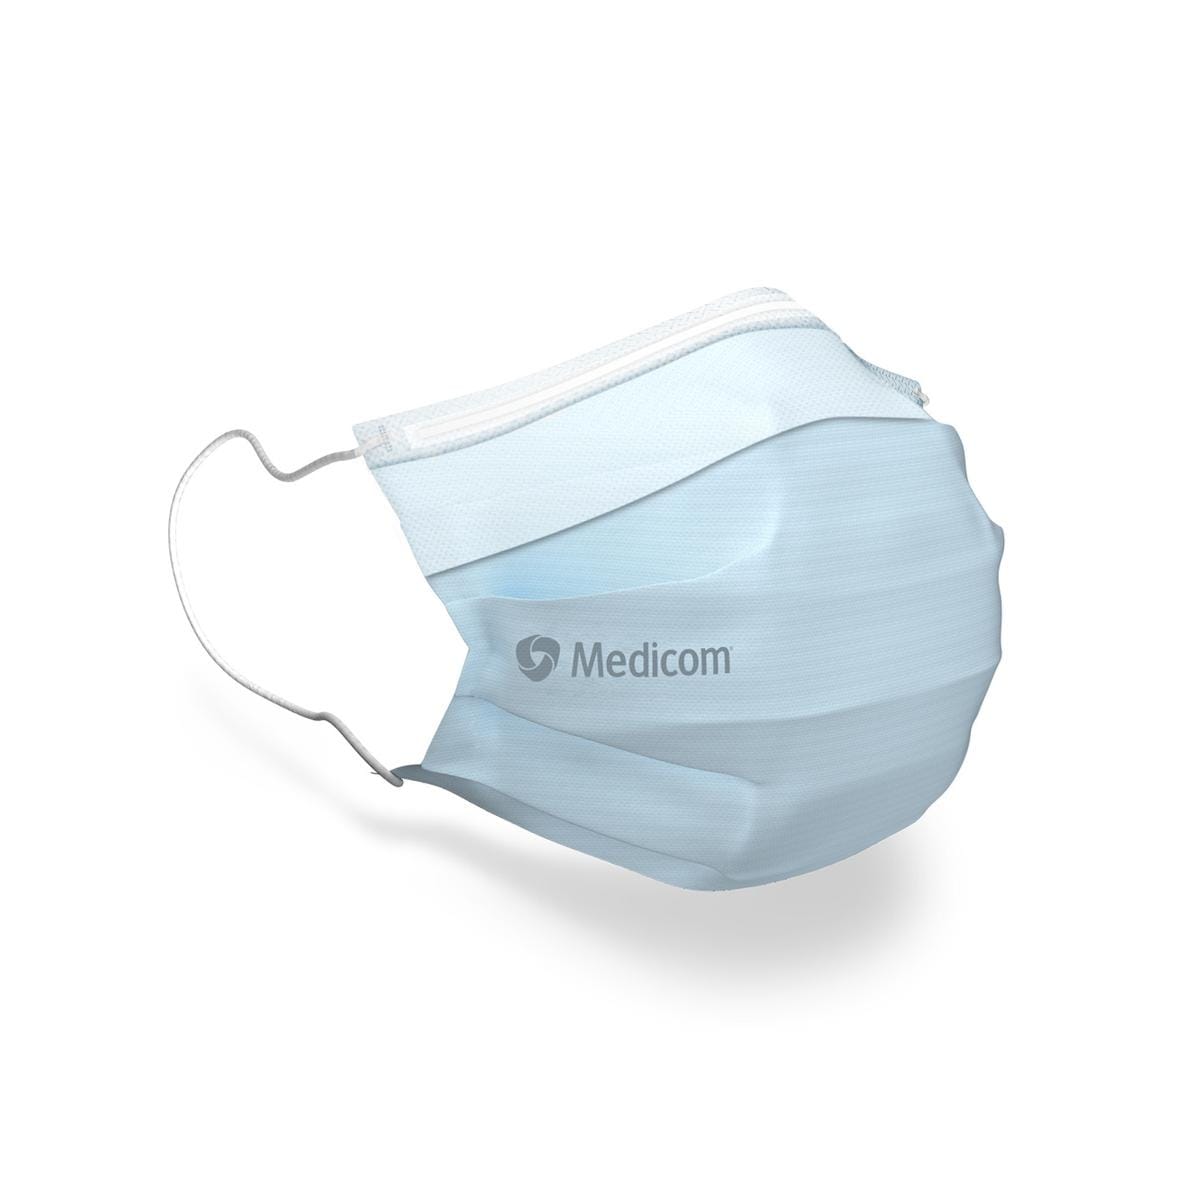 Mondmasker SafeMask SofSkin fog-free earloop Type IIR - Blauw - 50 stuks